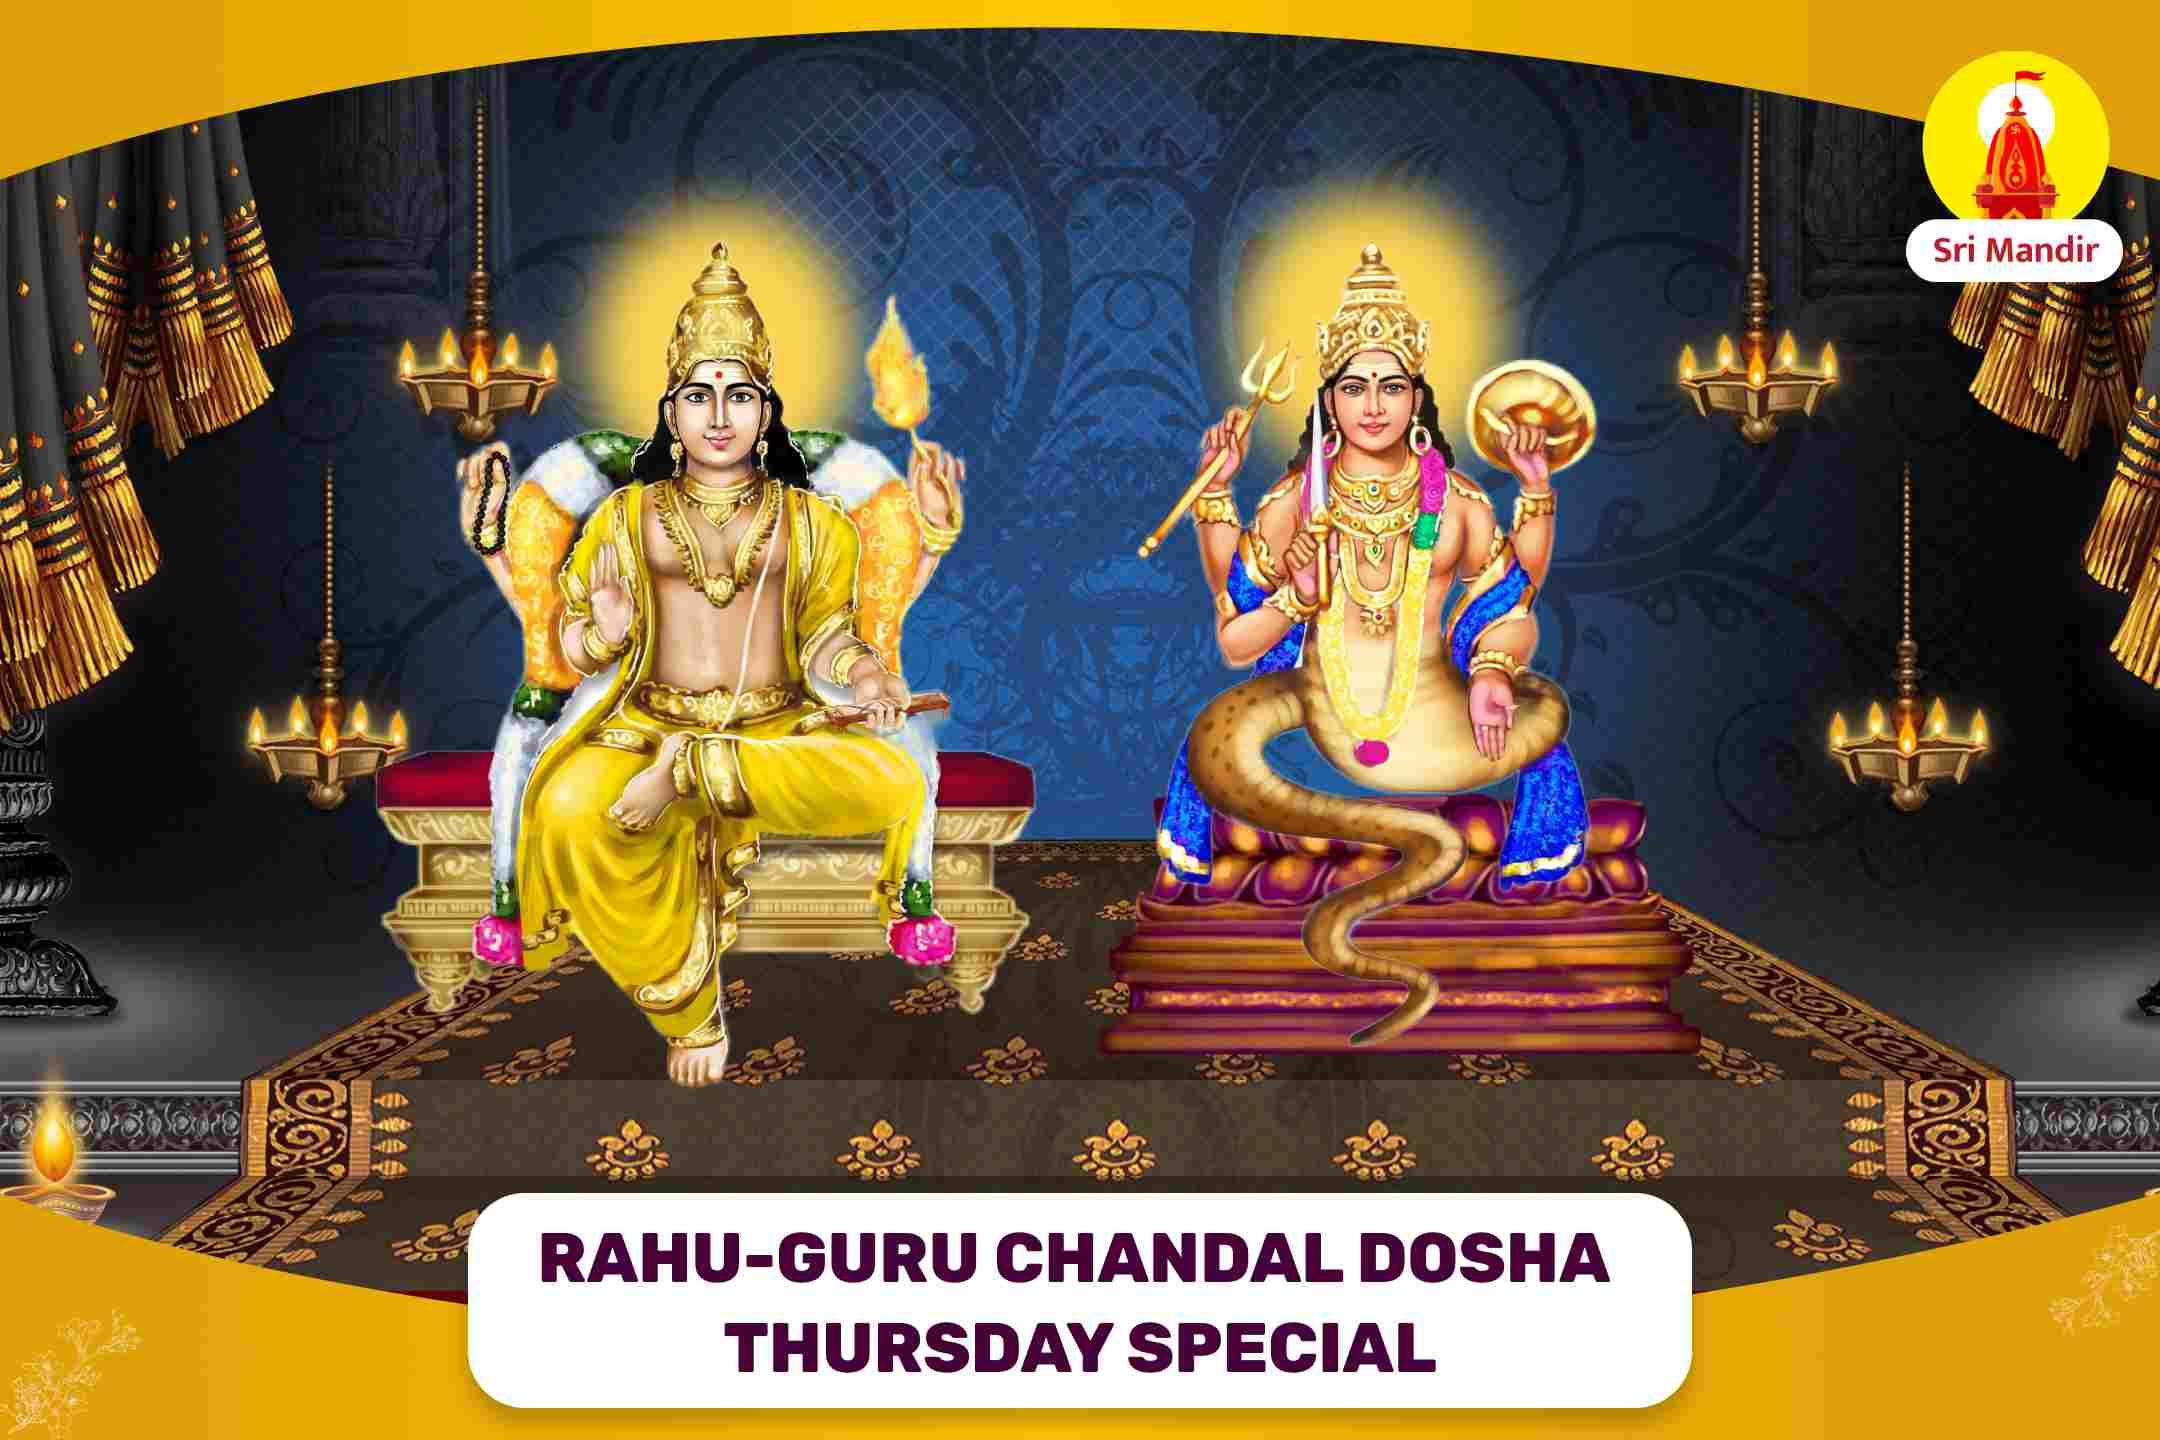 Thursday Special Rahu-Guru Chandal Dosha Shanti Mahapuja and Rudrabhishek For Success in Work and Economic Prosperity